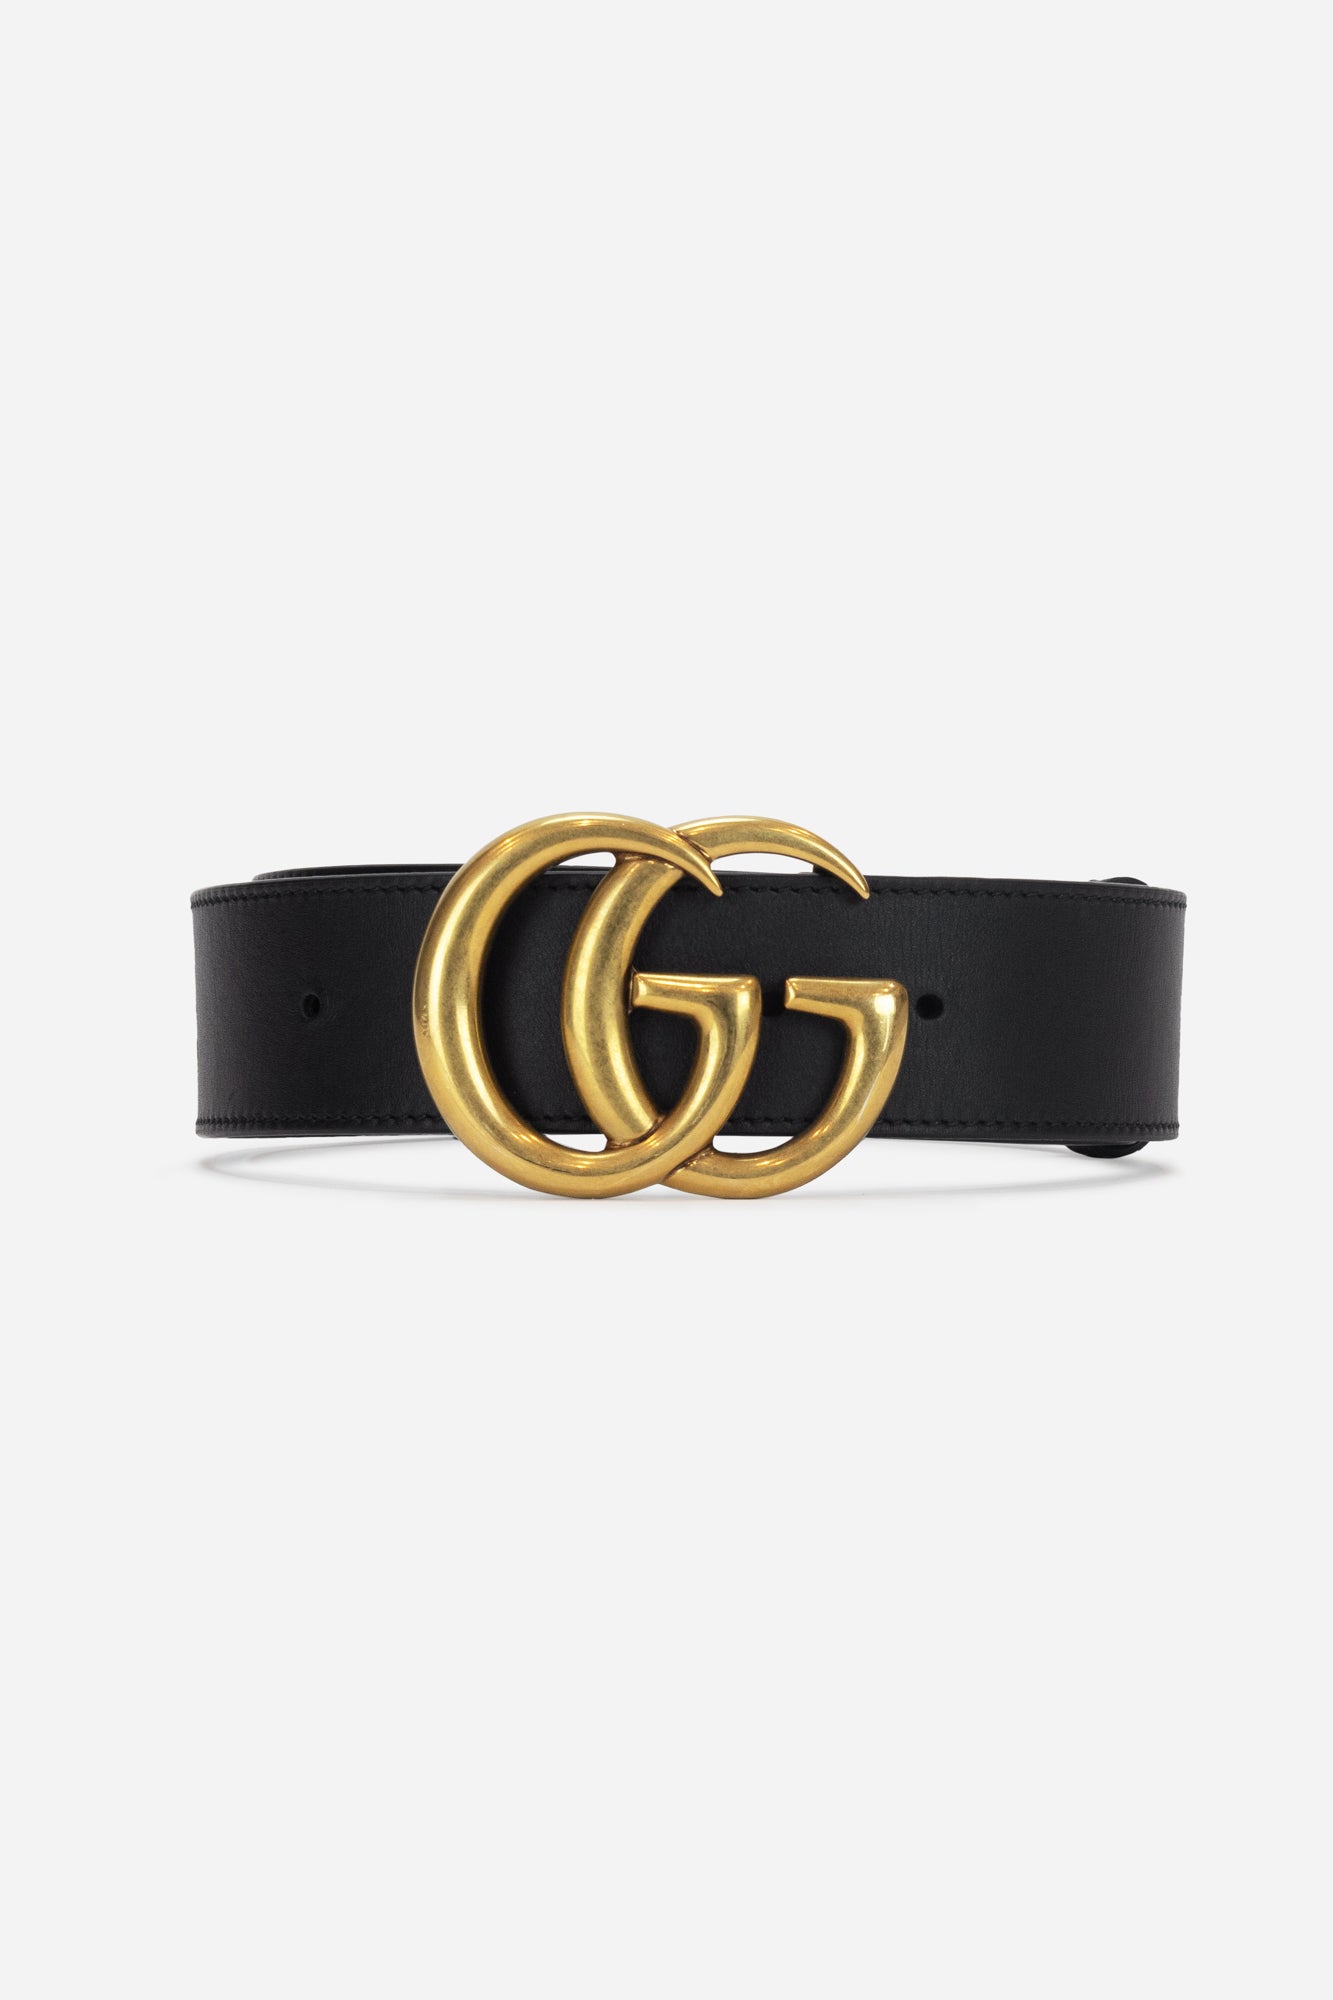 GG Marmont Black Belt Gold Hardware